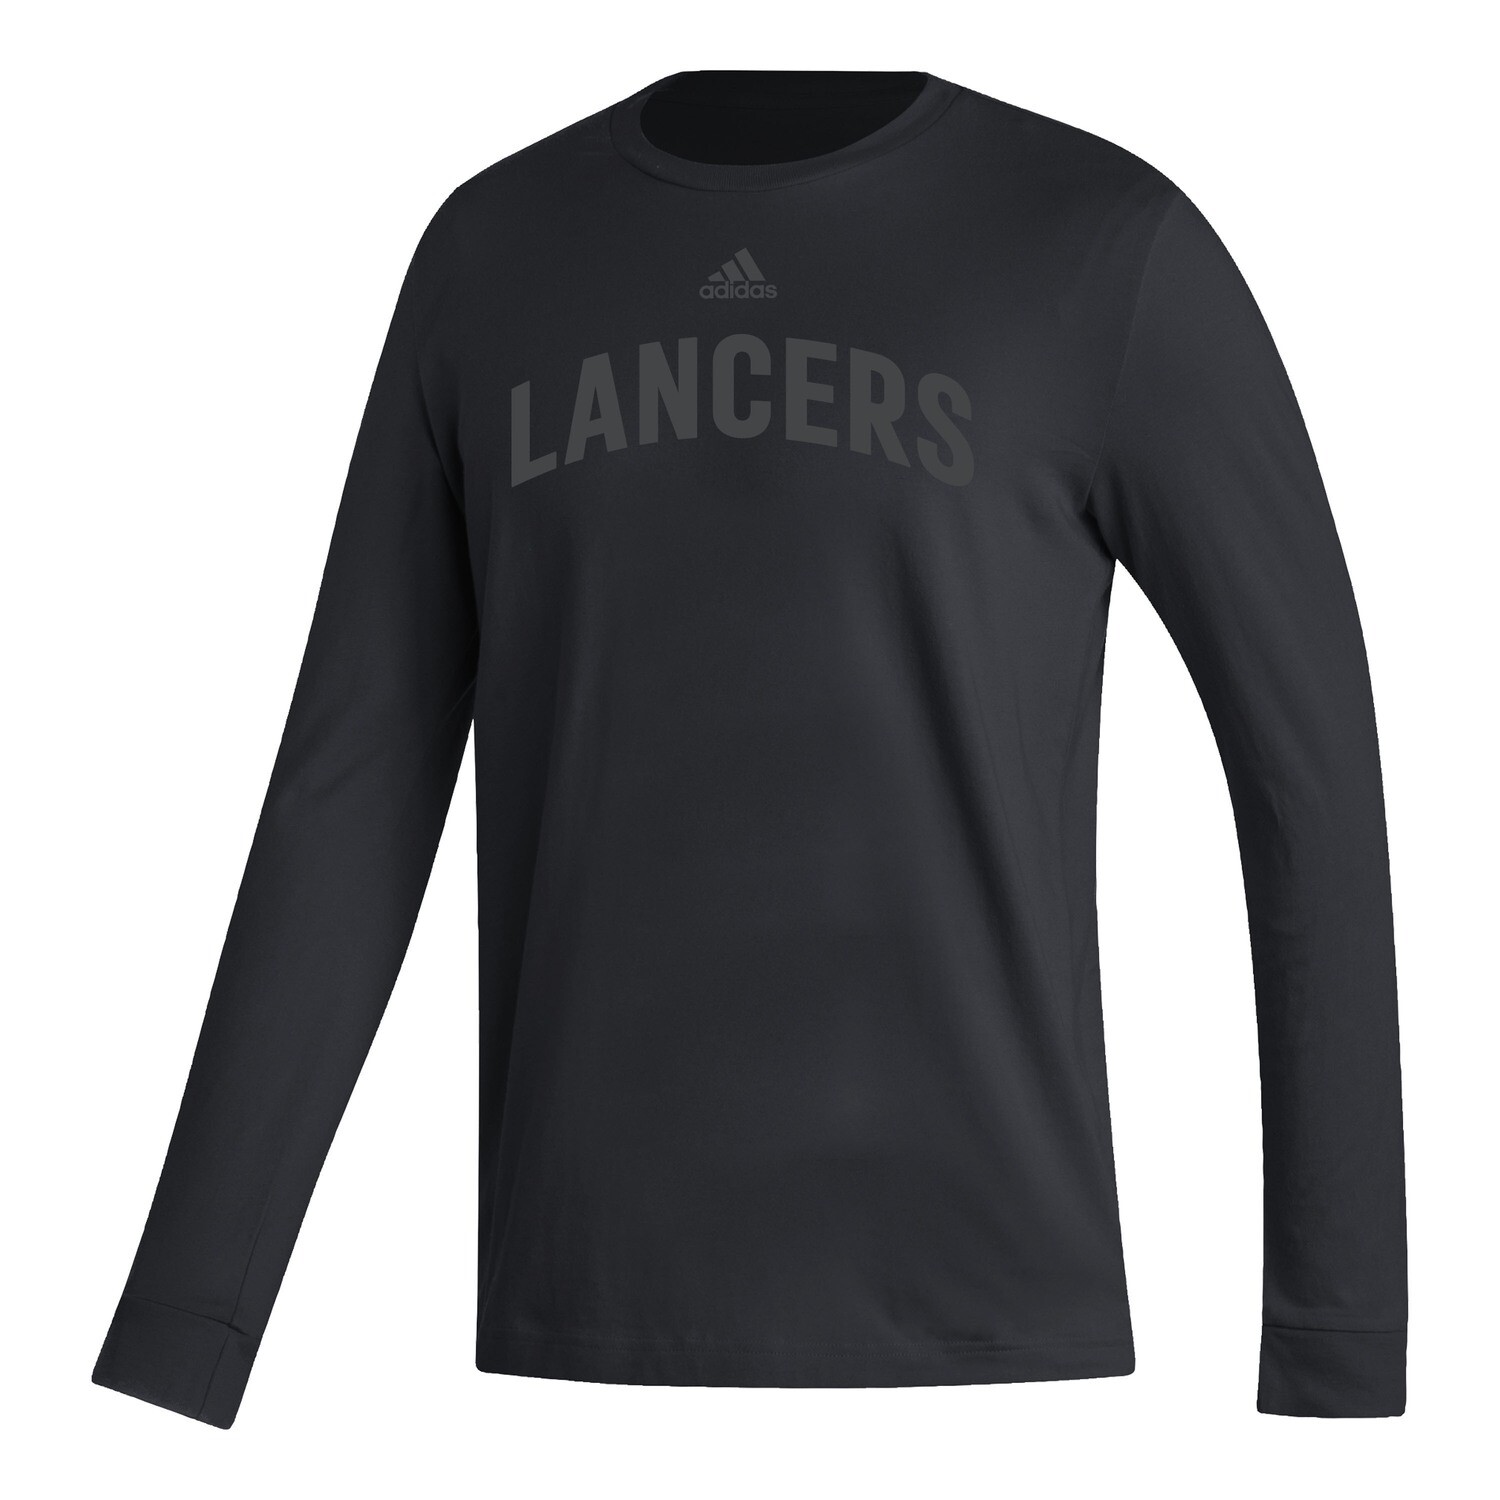 Lancers Long Sleeve Adidas